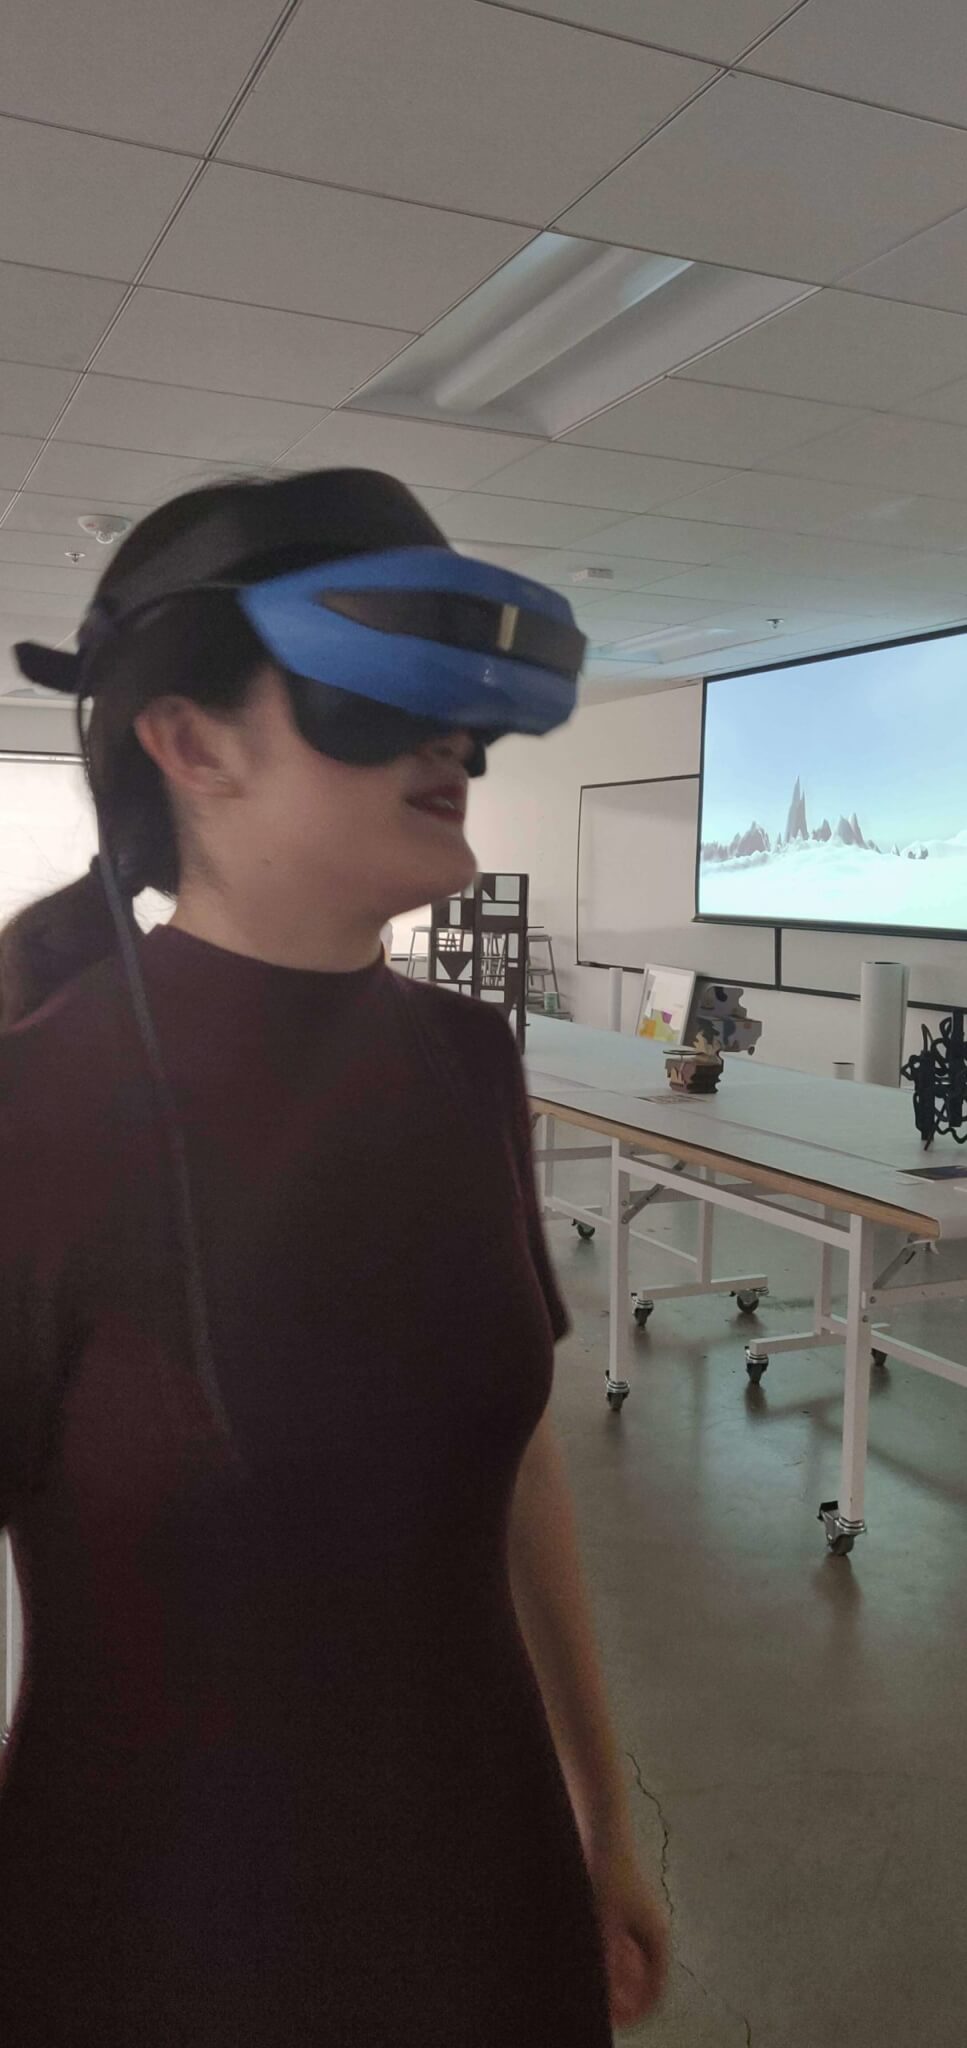 Woman wearing VR headset explores virtual sculpture.